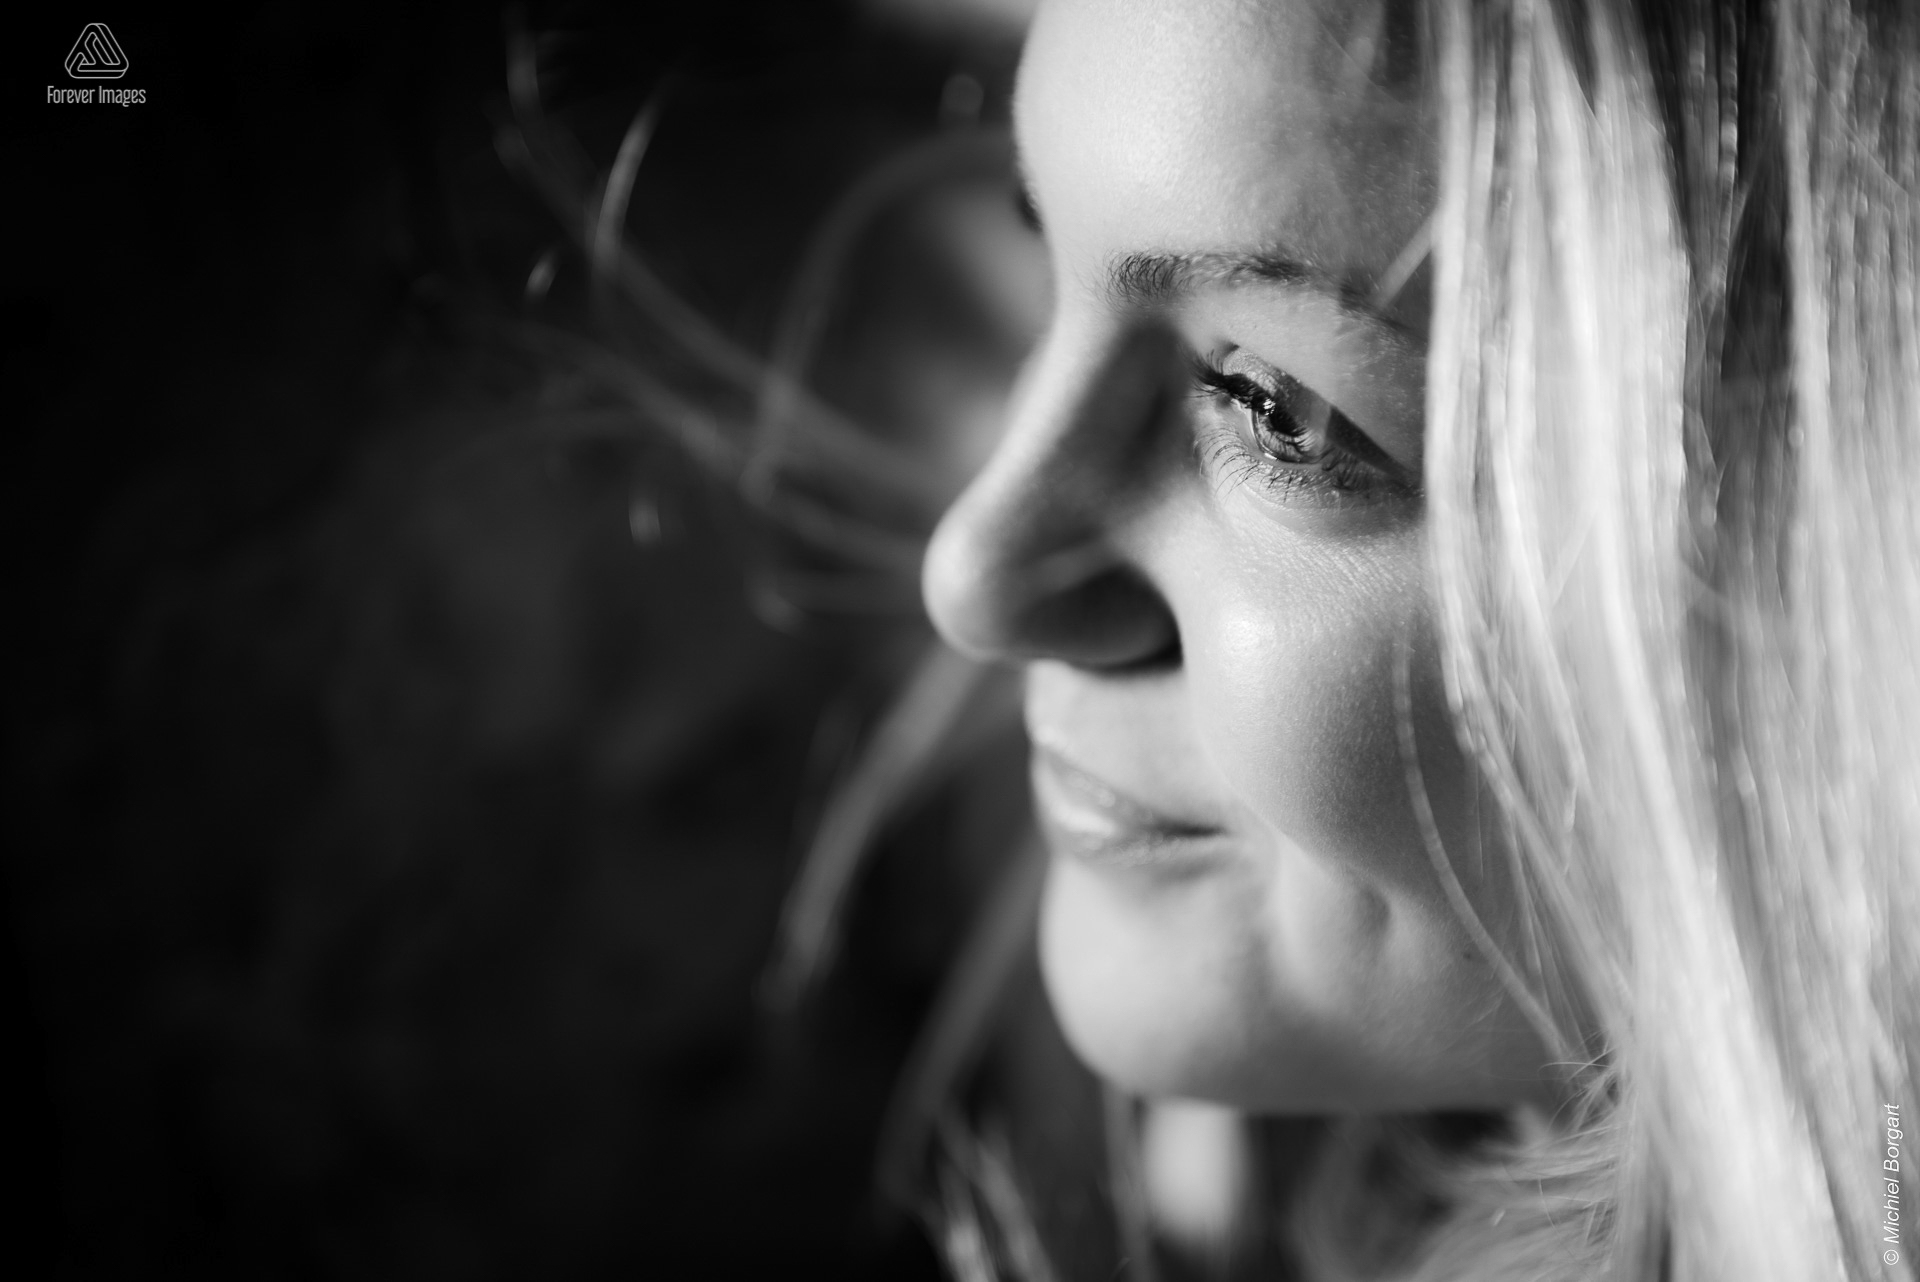 Portretfoto zwart-wit jonge dame mooie glimlach kuiltjes in wang | Porscha Luna de Jong Happyhappyjoyjoy | Portretfotograaf Michiel Borgart - Forever Images.